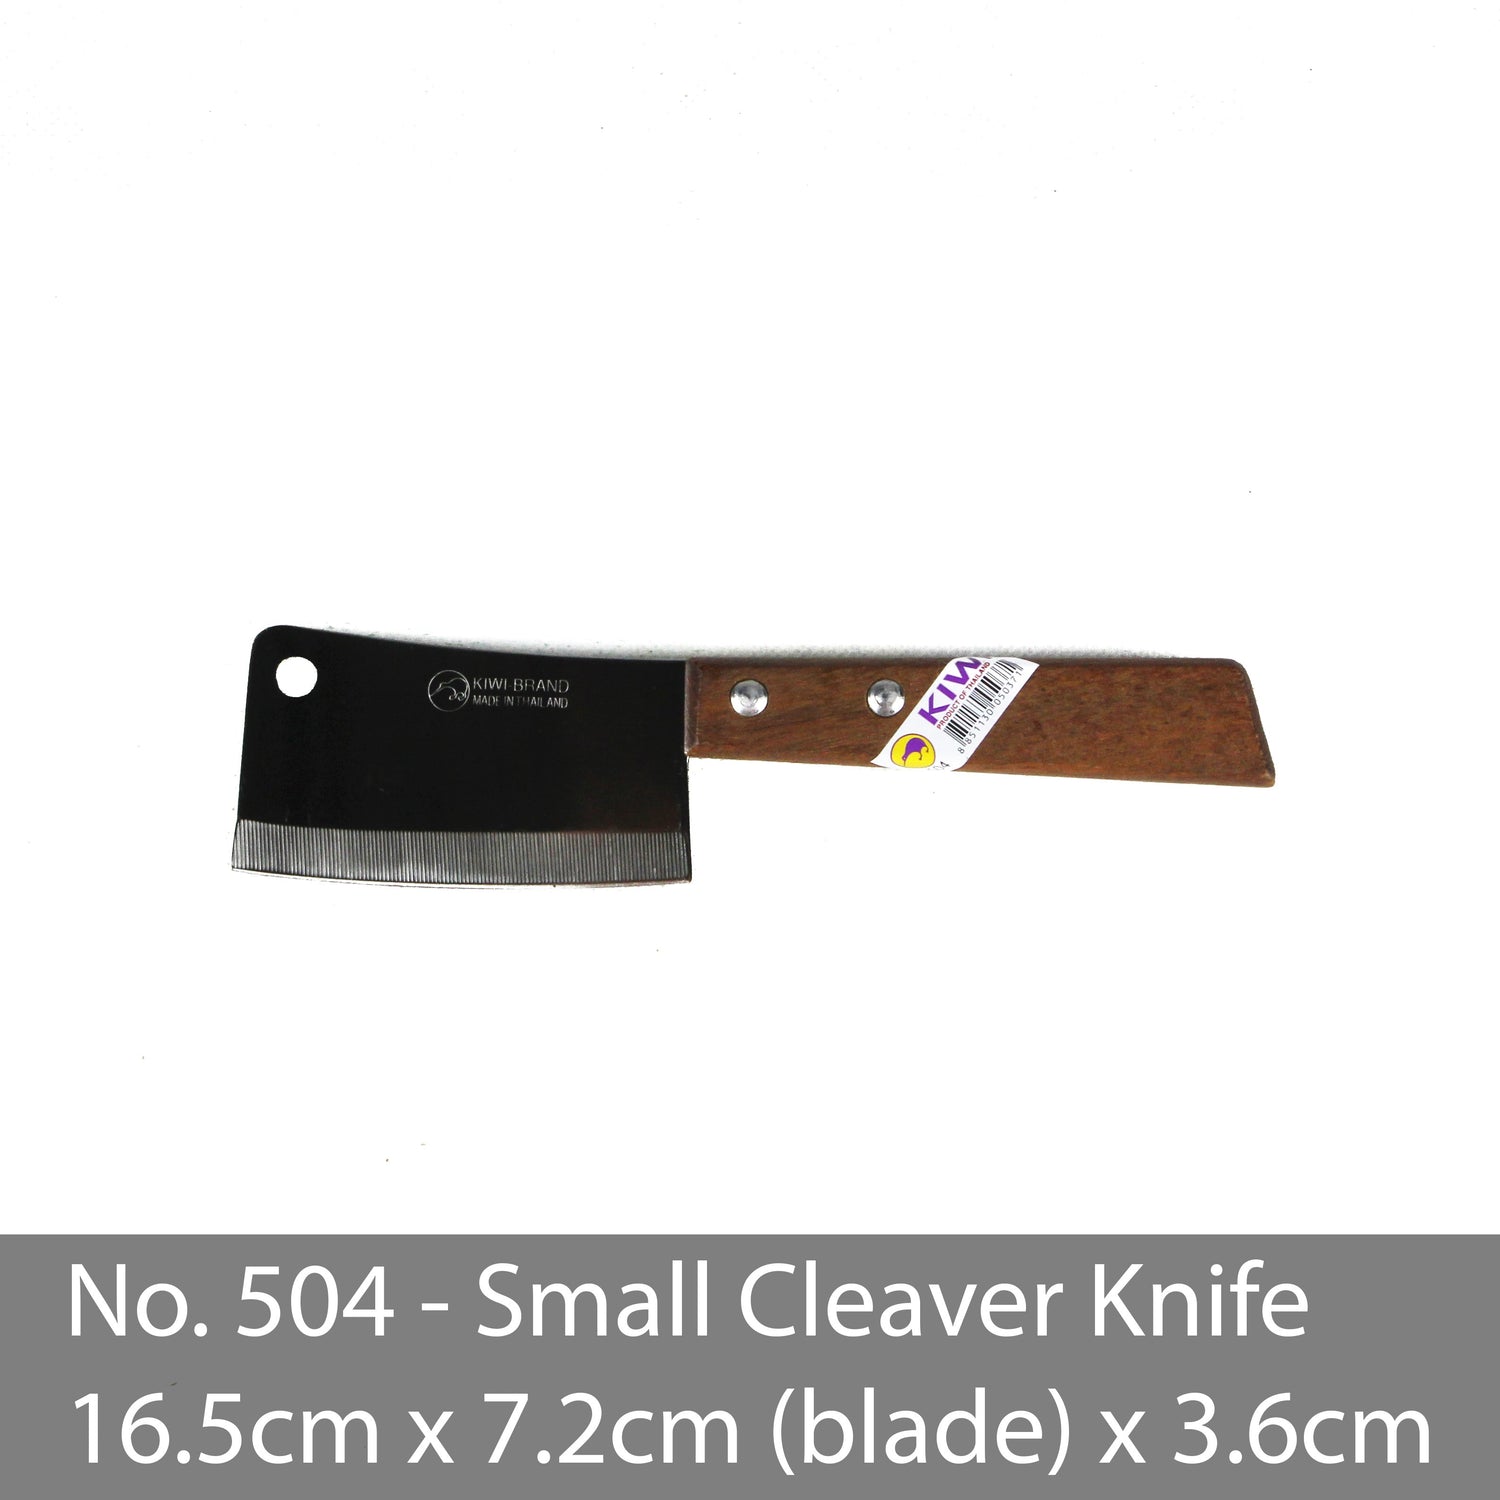 Why I like the Kiwi knife - Cheap kitchen knife from Thailand (Kiwi Brand)  